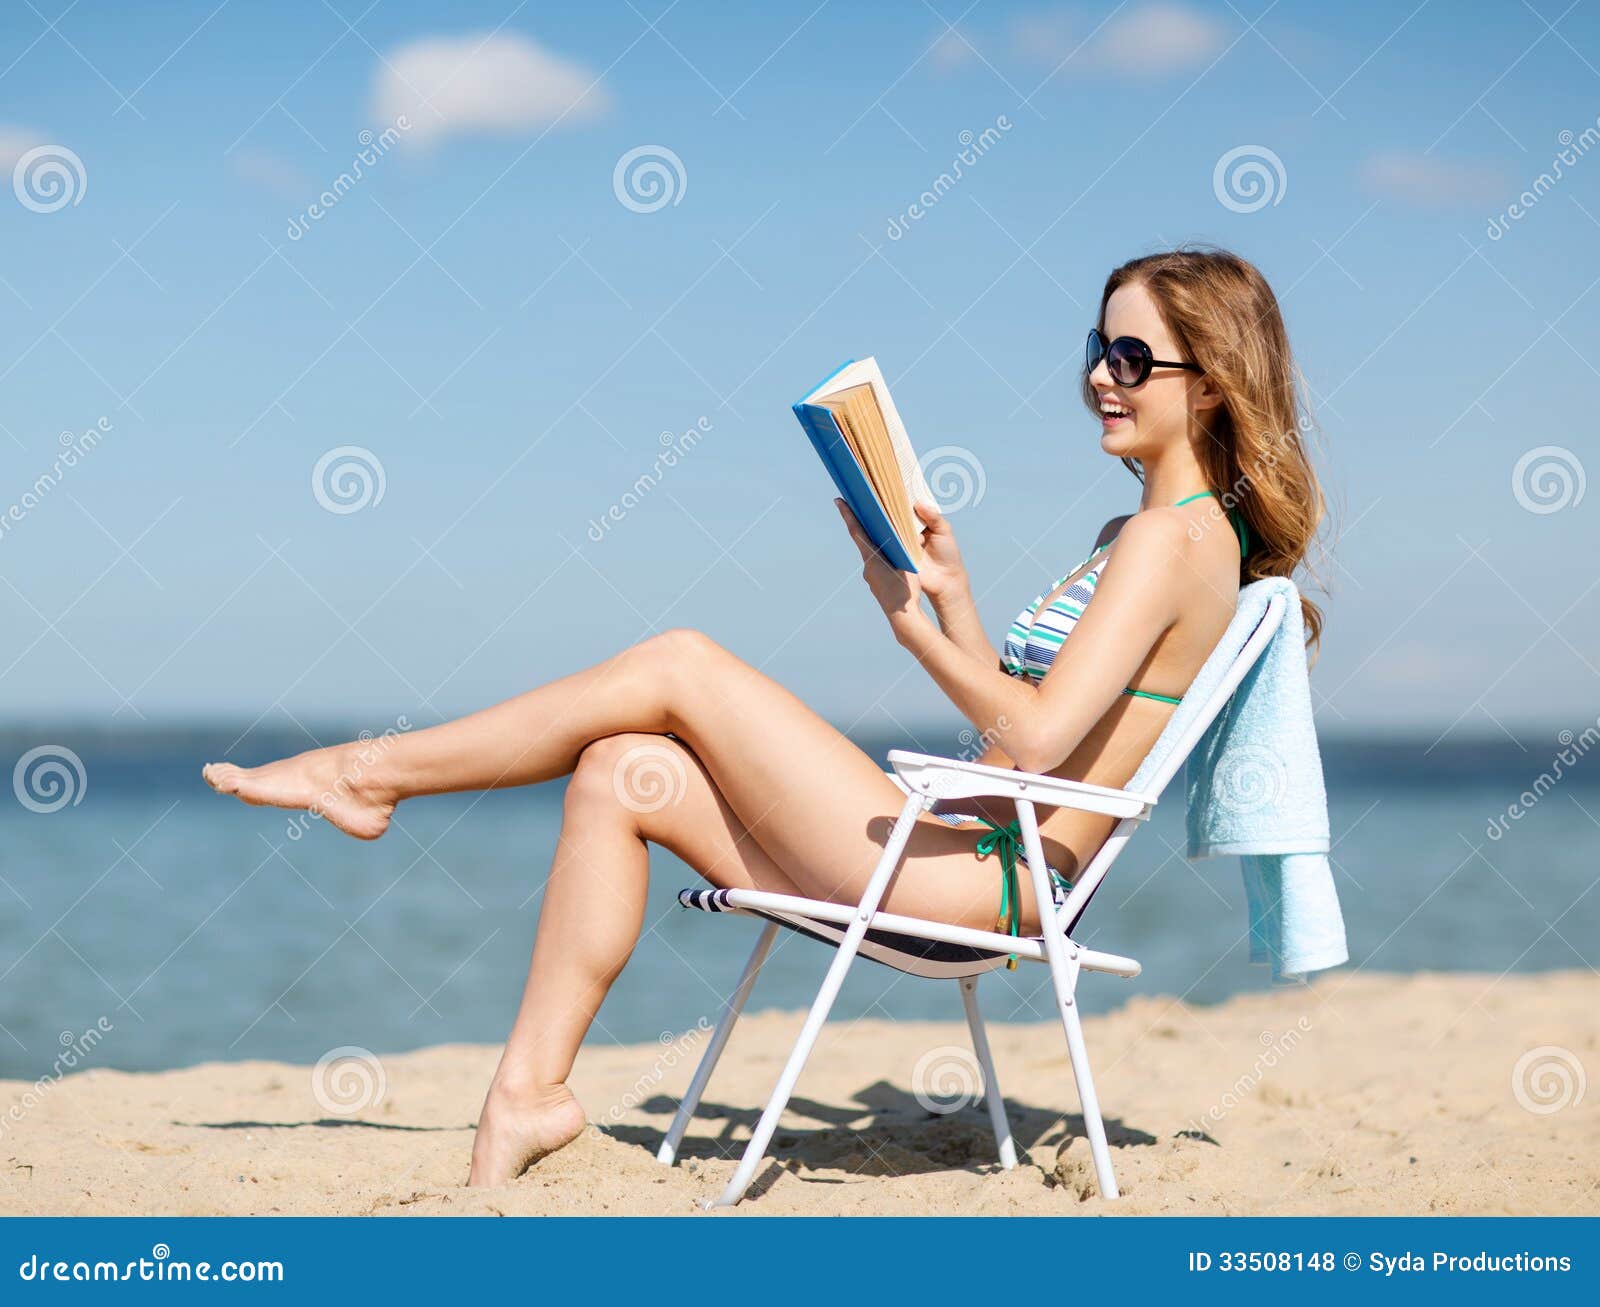 Girls On Beach Chairs